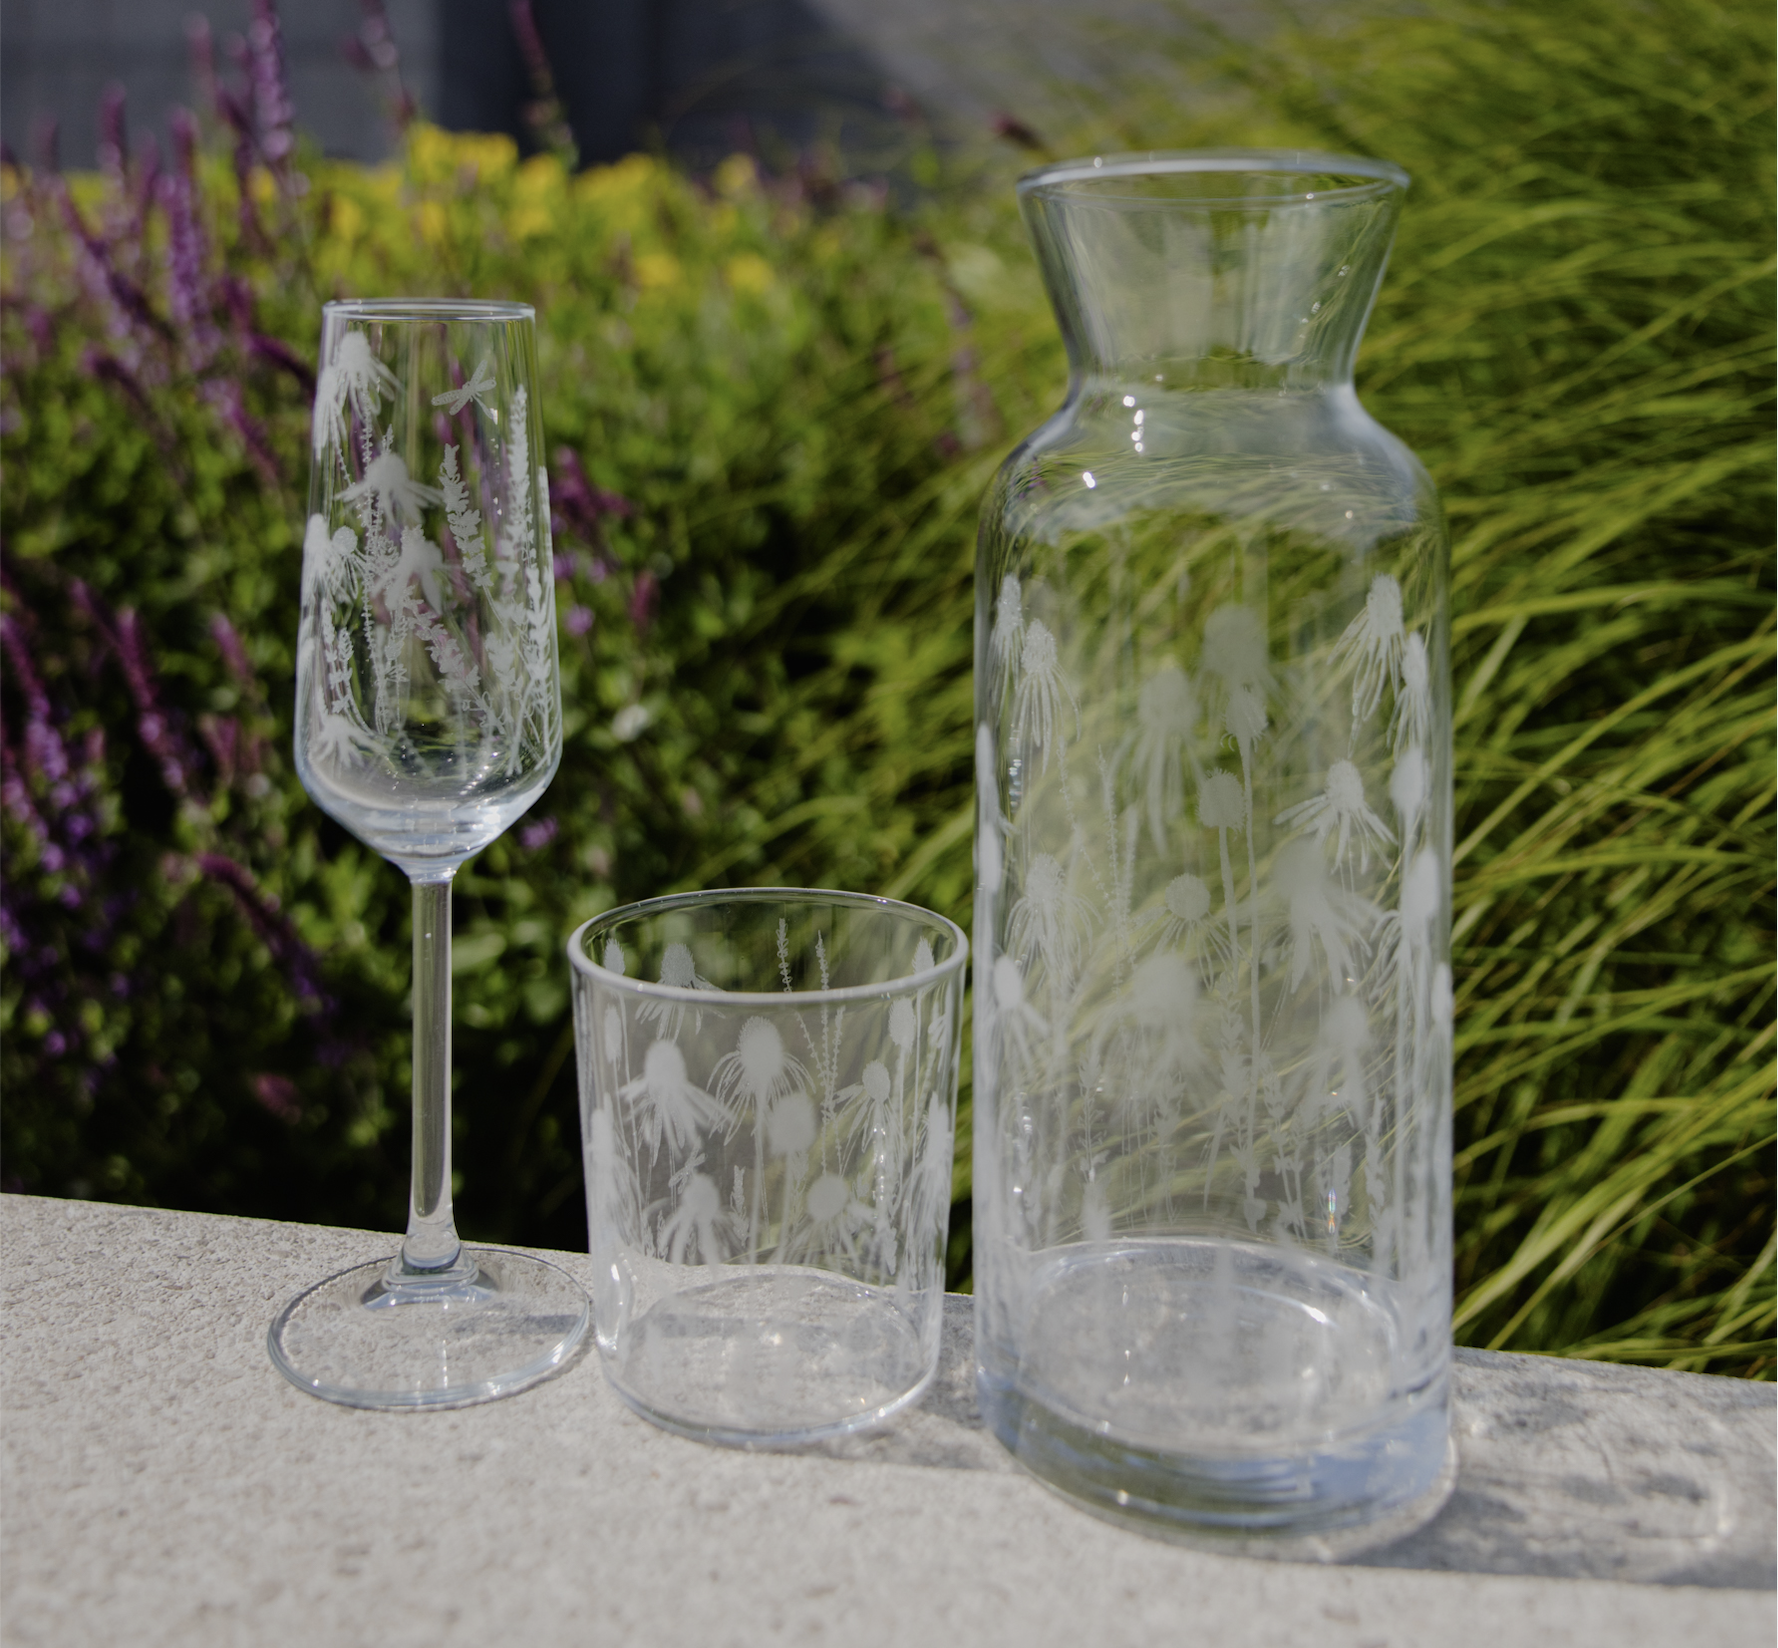 Emma Britton The Hepworth Wakefield Garden Collection Glasssware Carafe, Tumbler, Flute